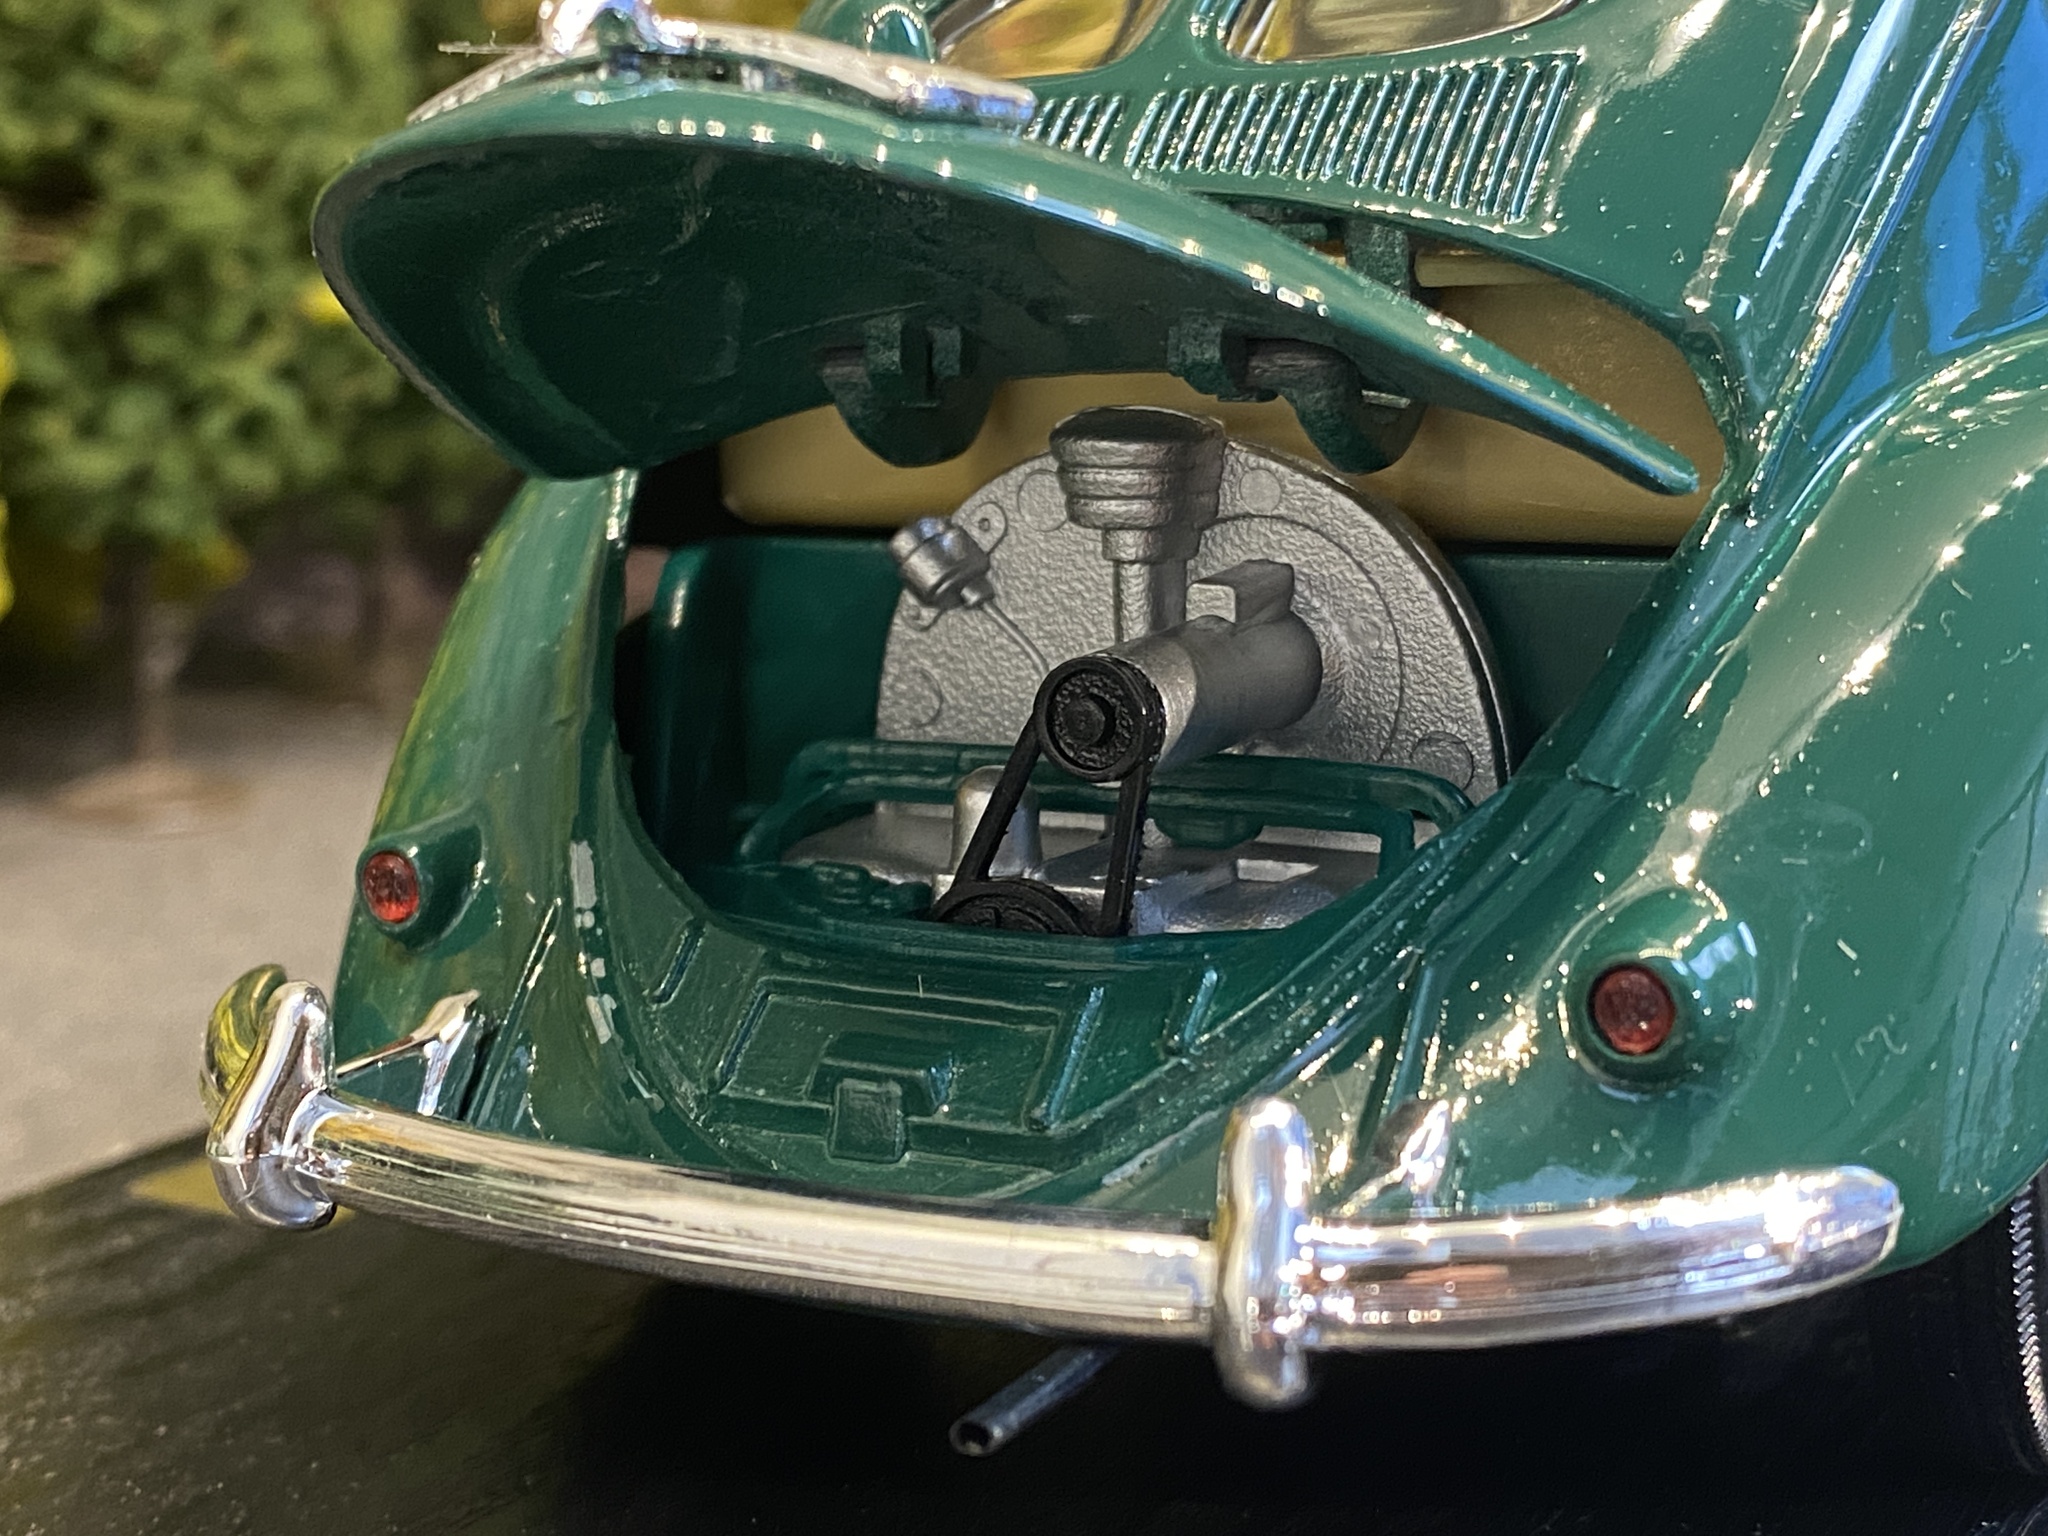 Skala 1/18 Volkswagen Beetle 1951 Green fr Maisto - Silver Edition